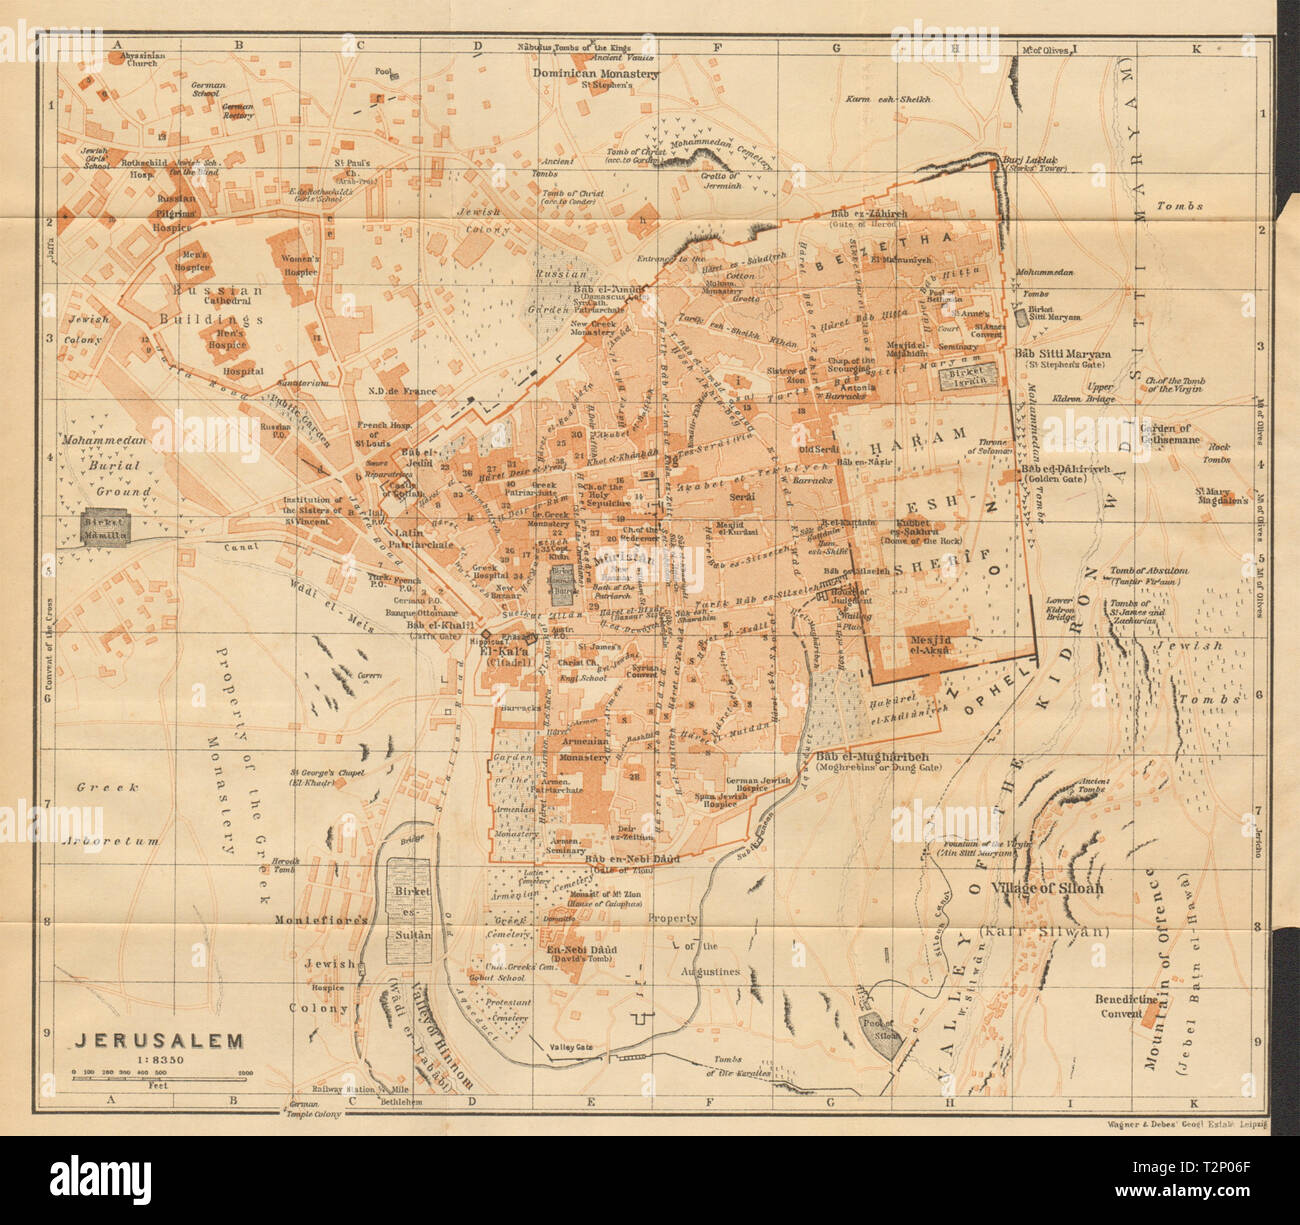 Jerusalem antique town city plan. Israel 1912 old map chart Stock Photo -  Alamy